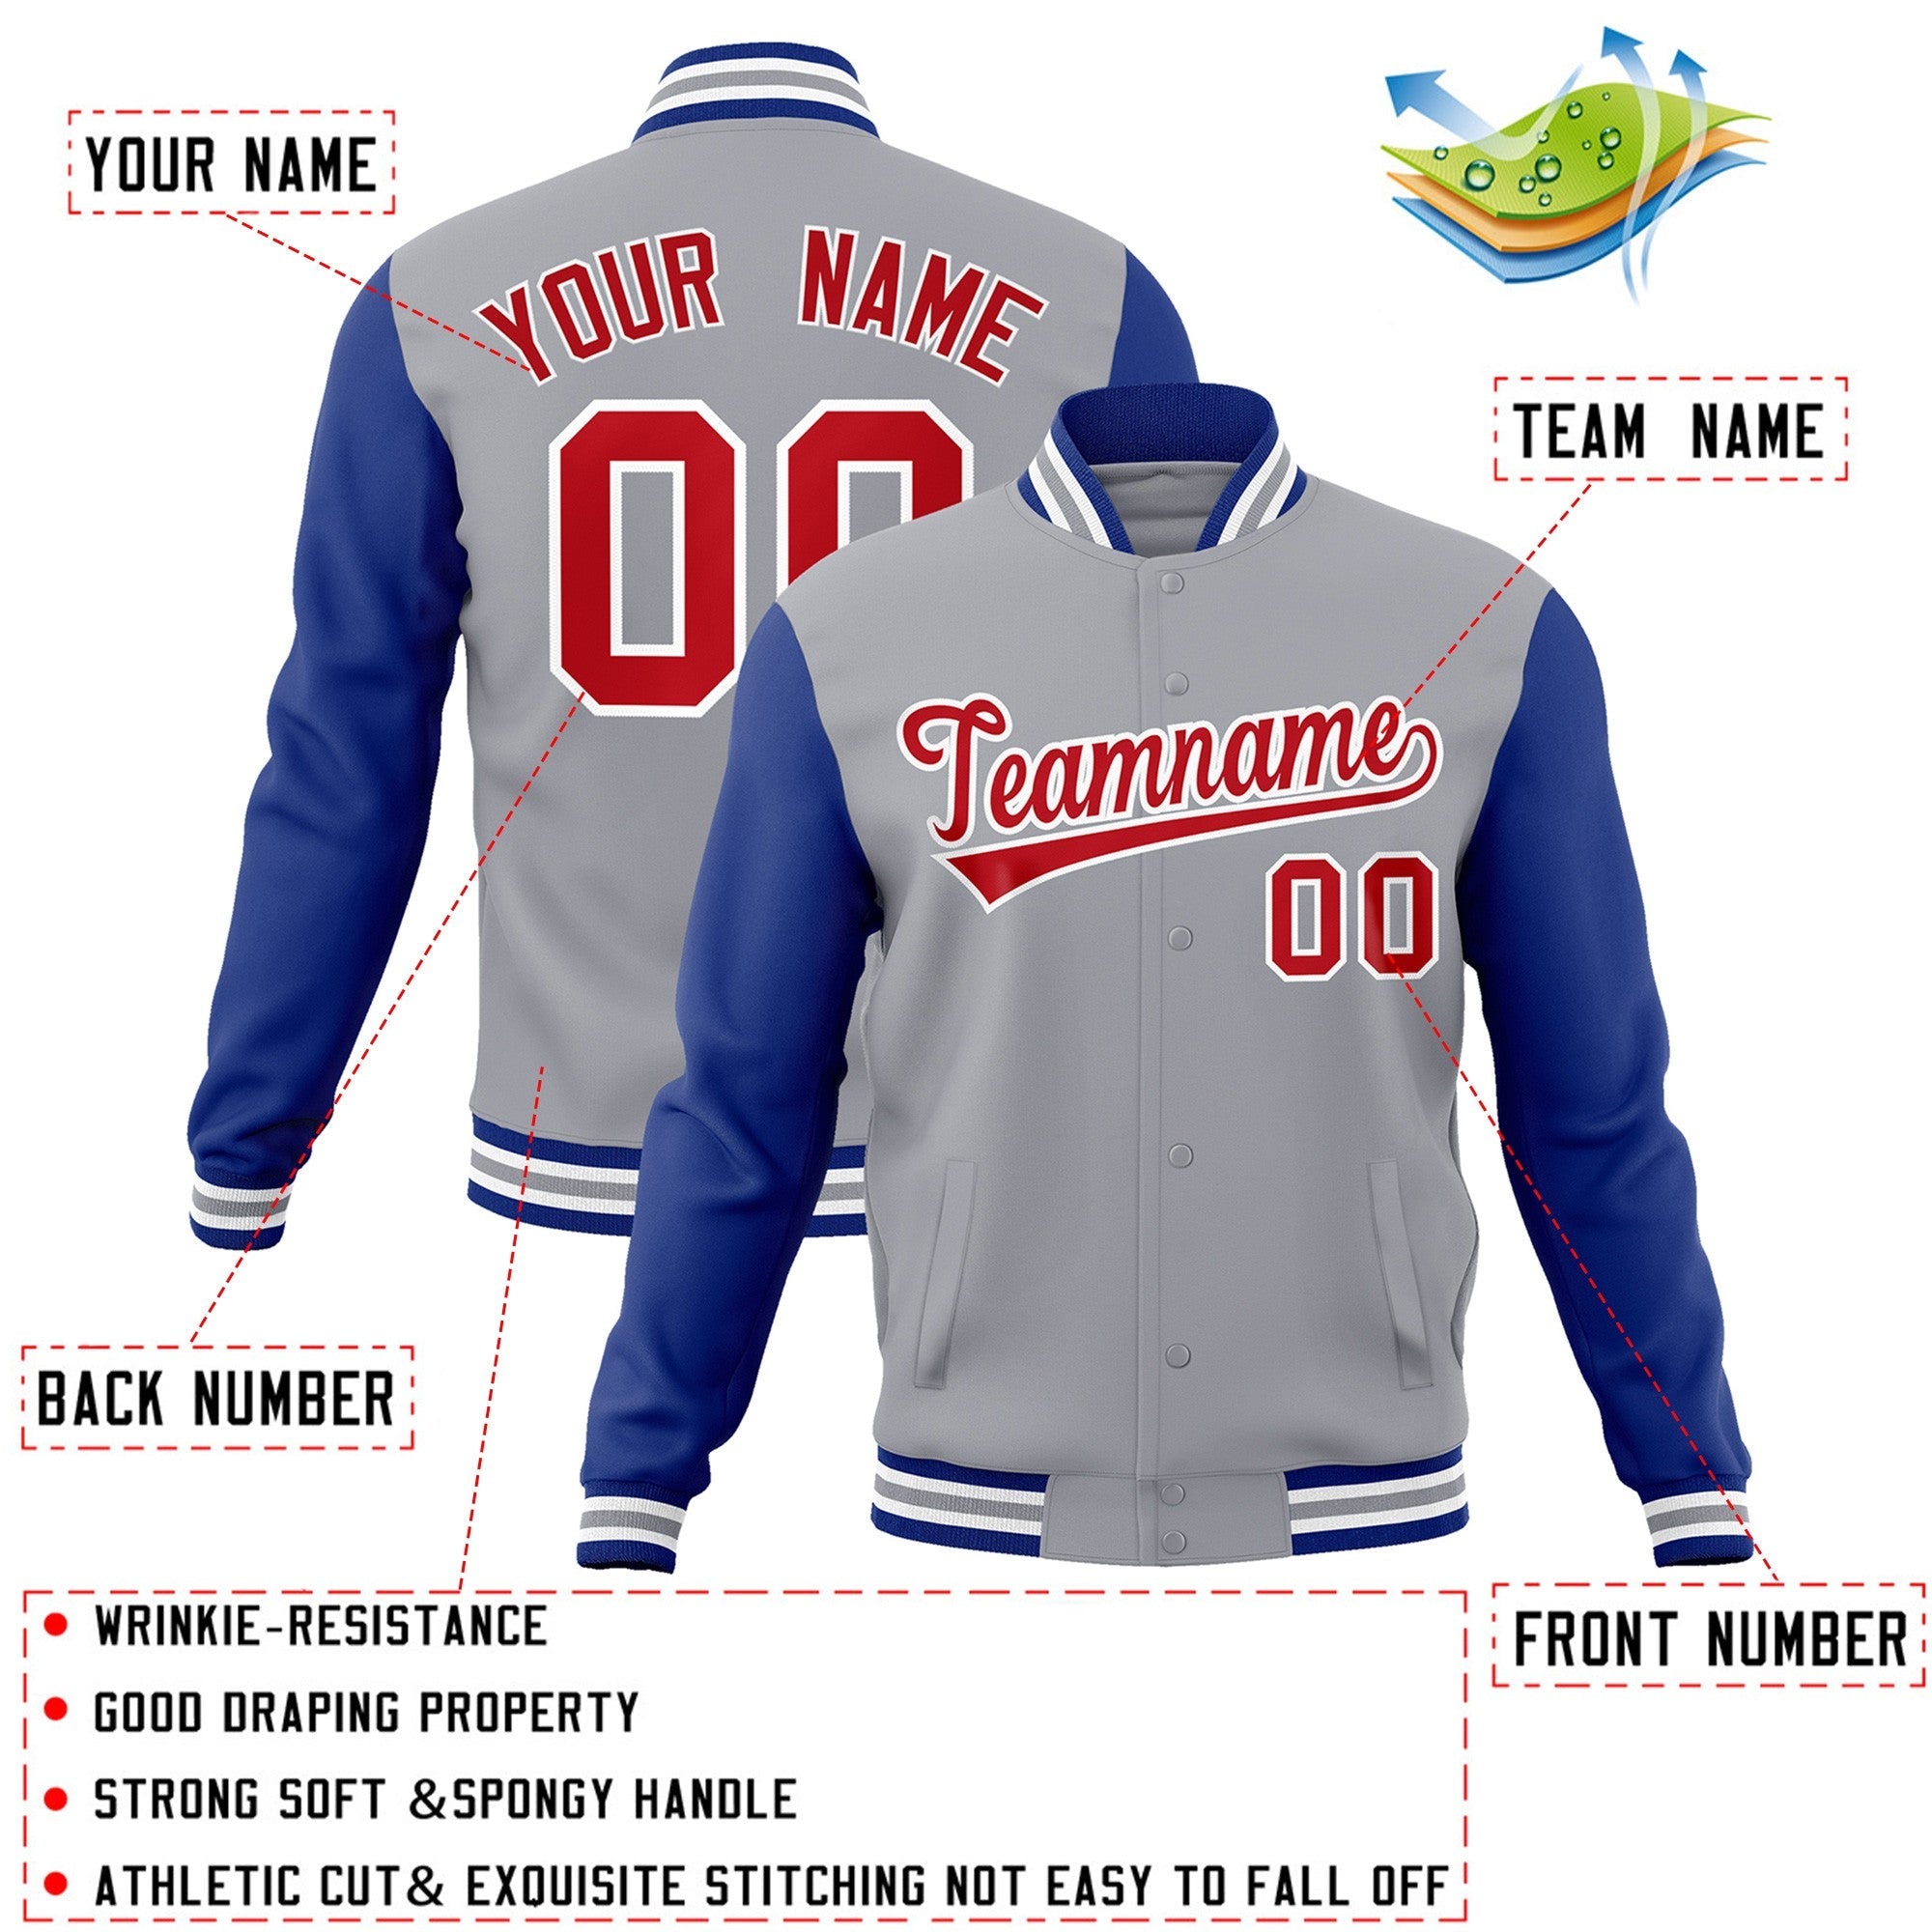 customize jackets online